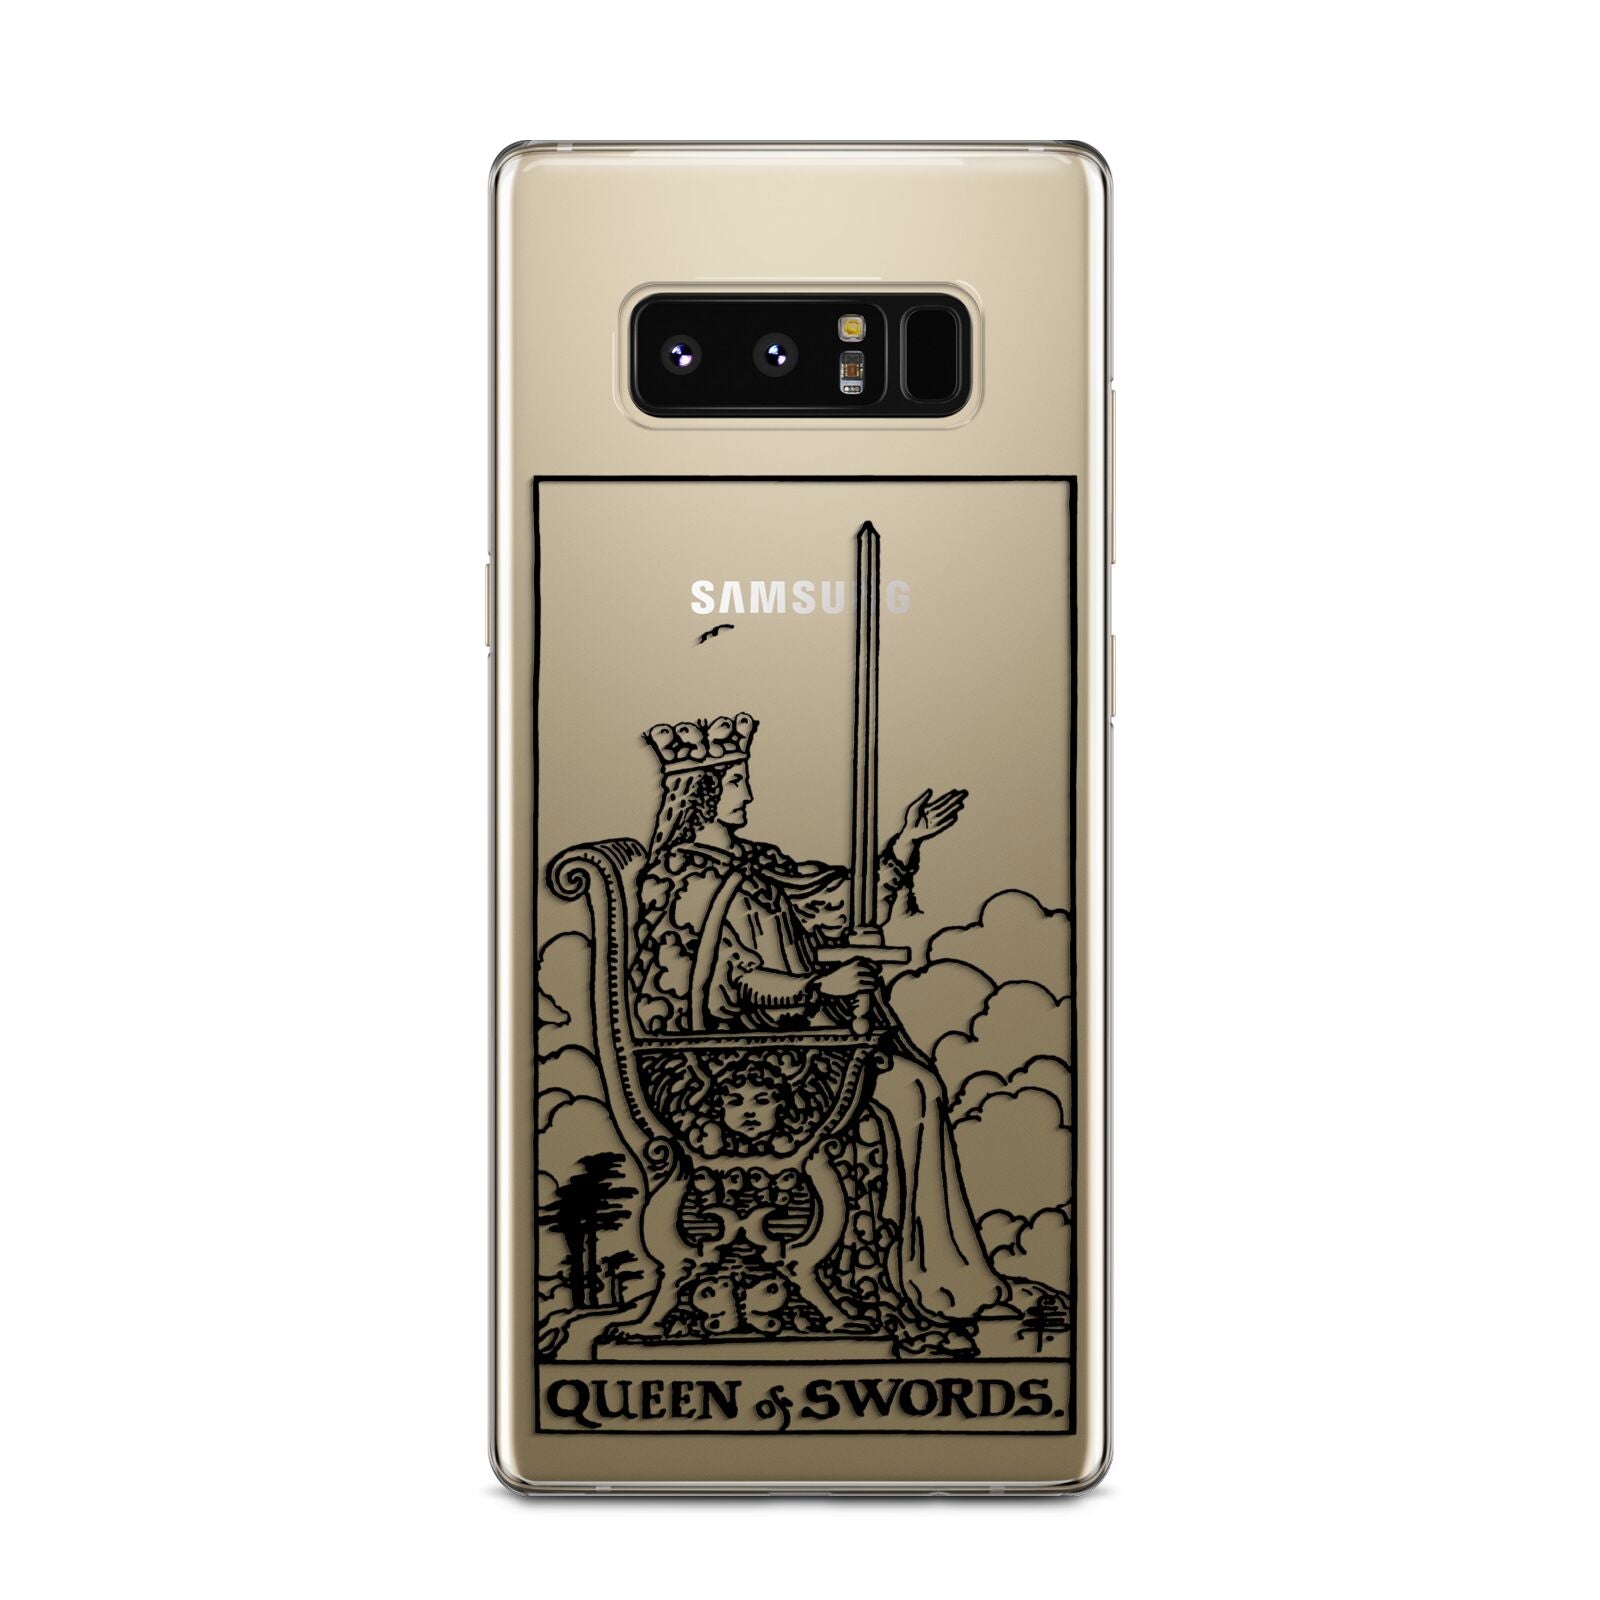 Queen of Swords Monochrome Samsung Galaxy Note 8 Case